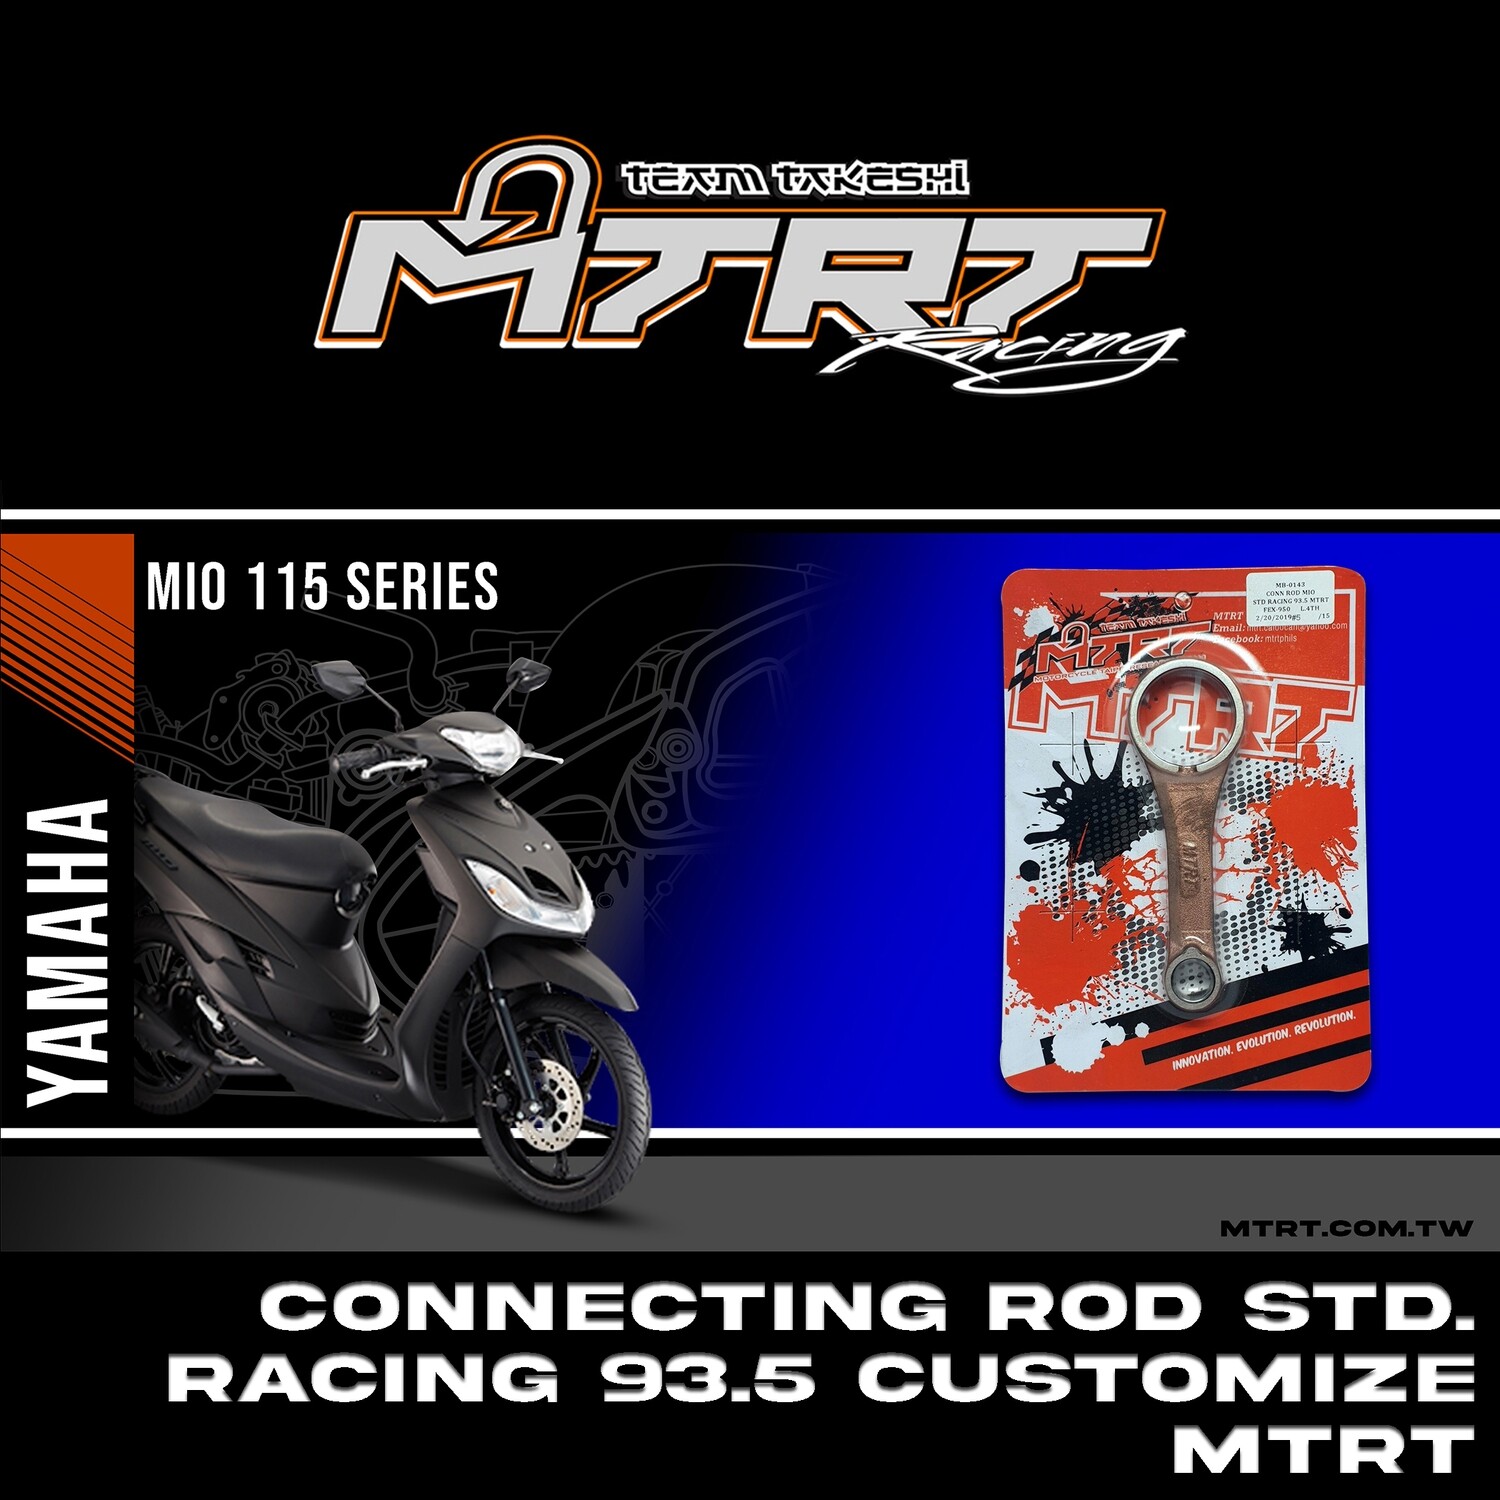 CONN ROD Standard Racing 93.5 customize